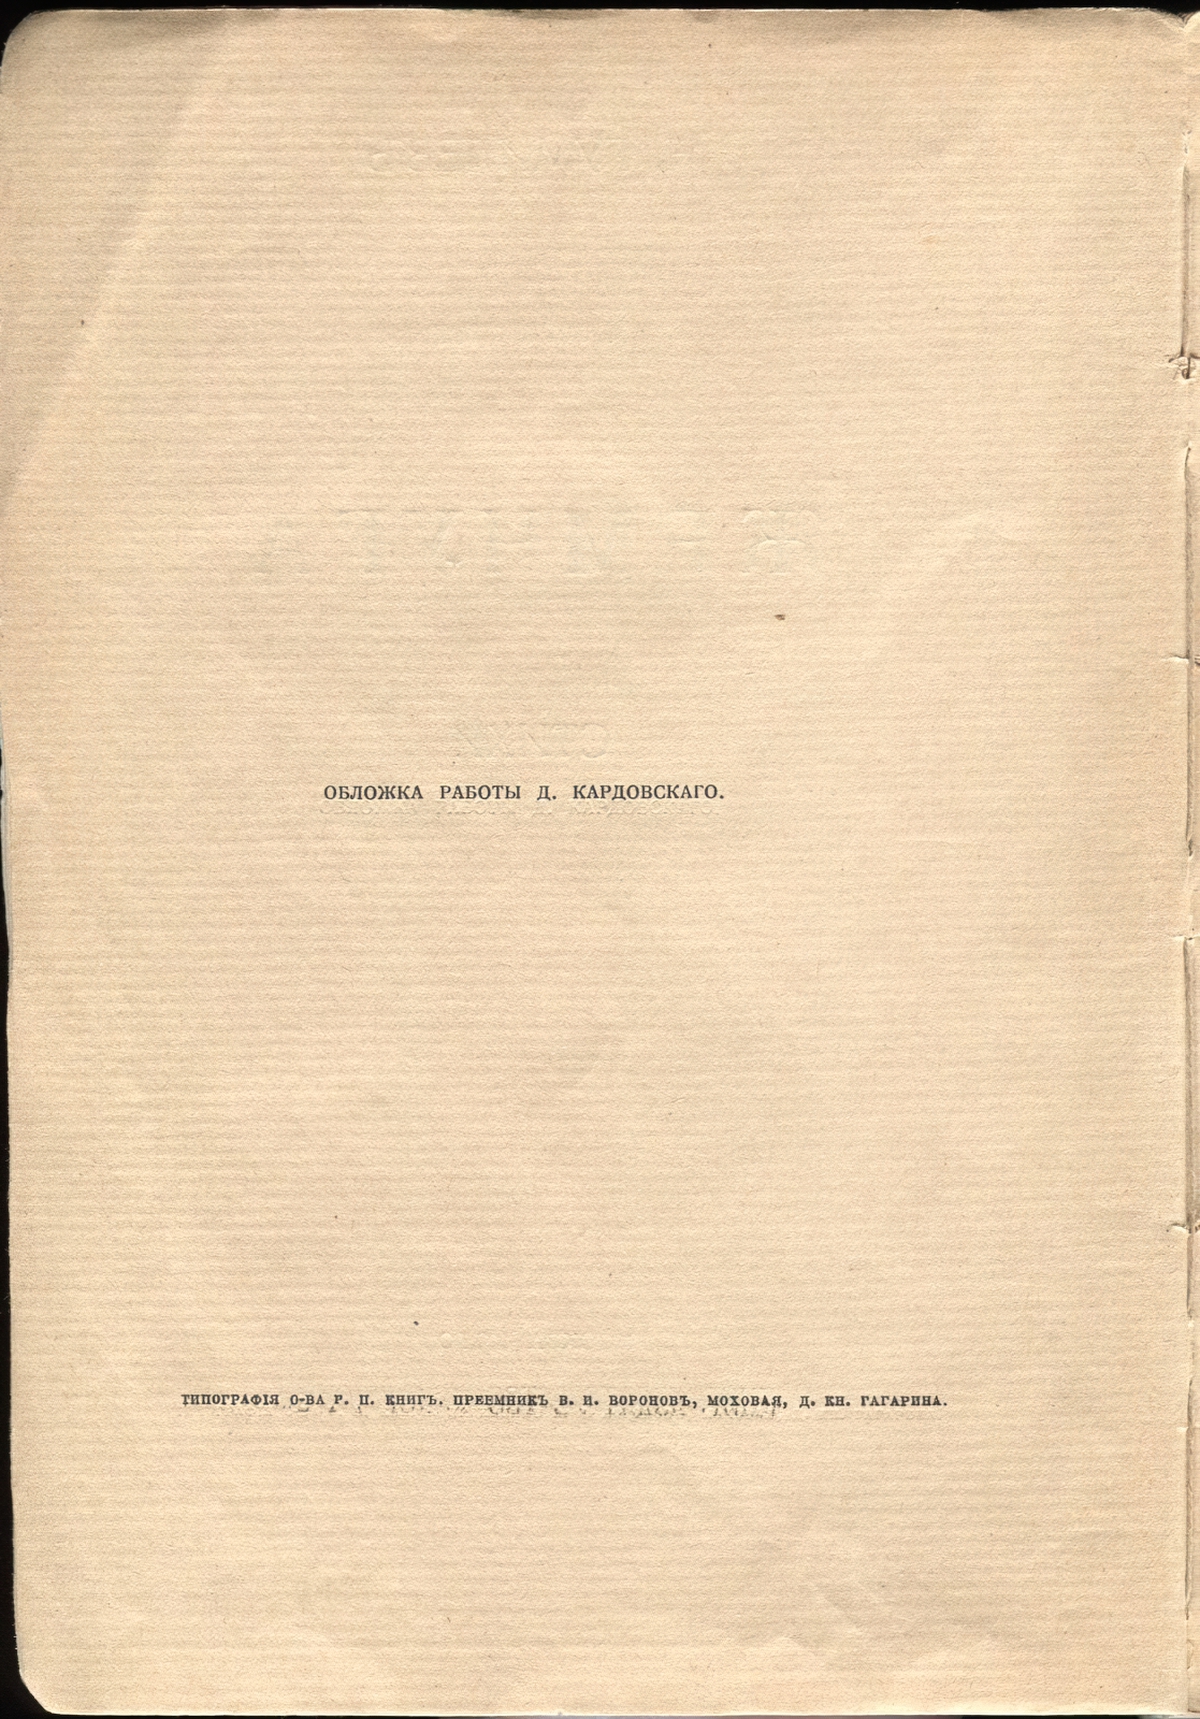 Жемчуга (1910). Титульный лист 4